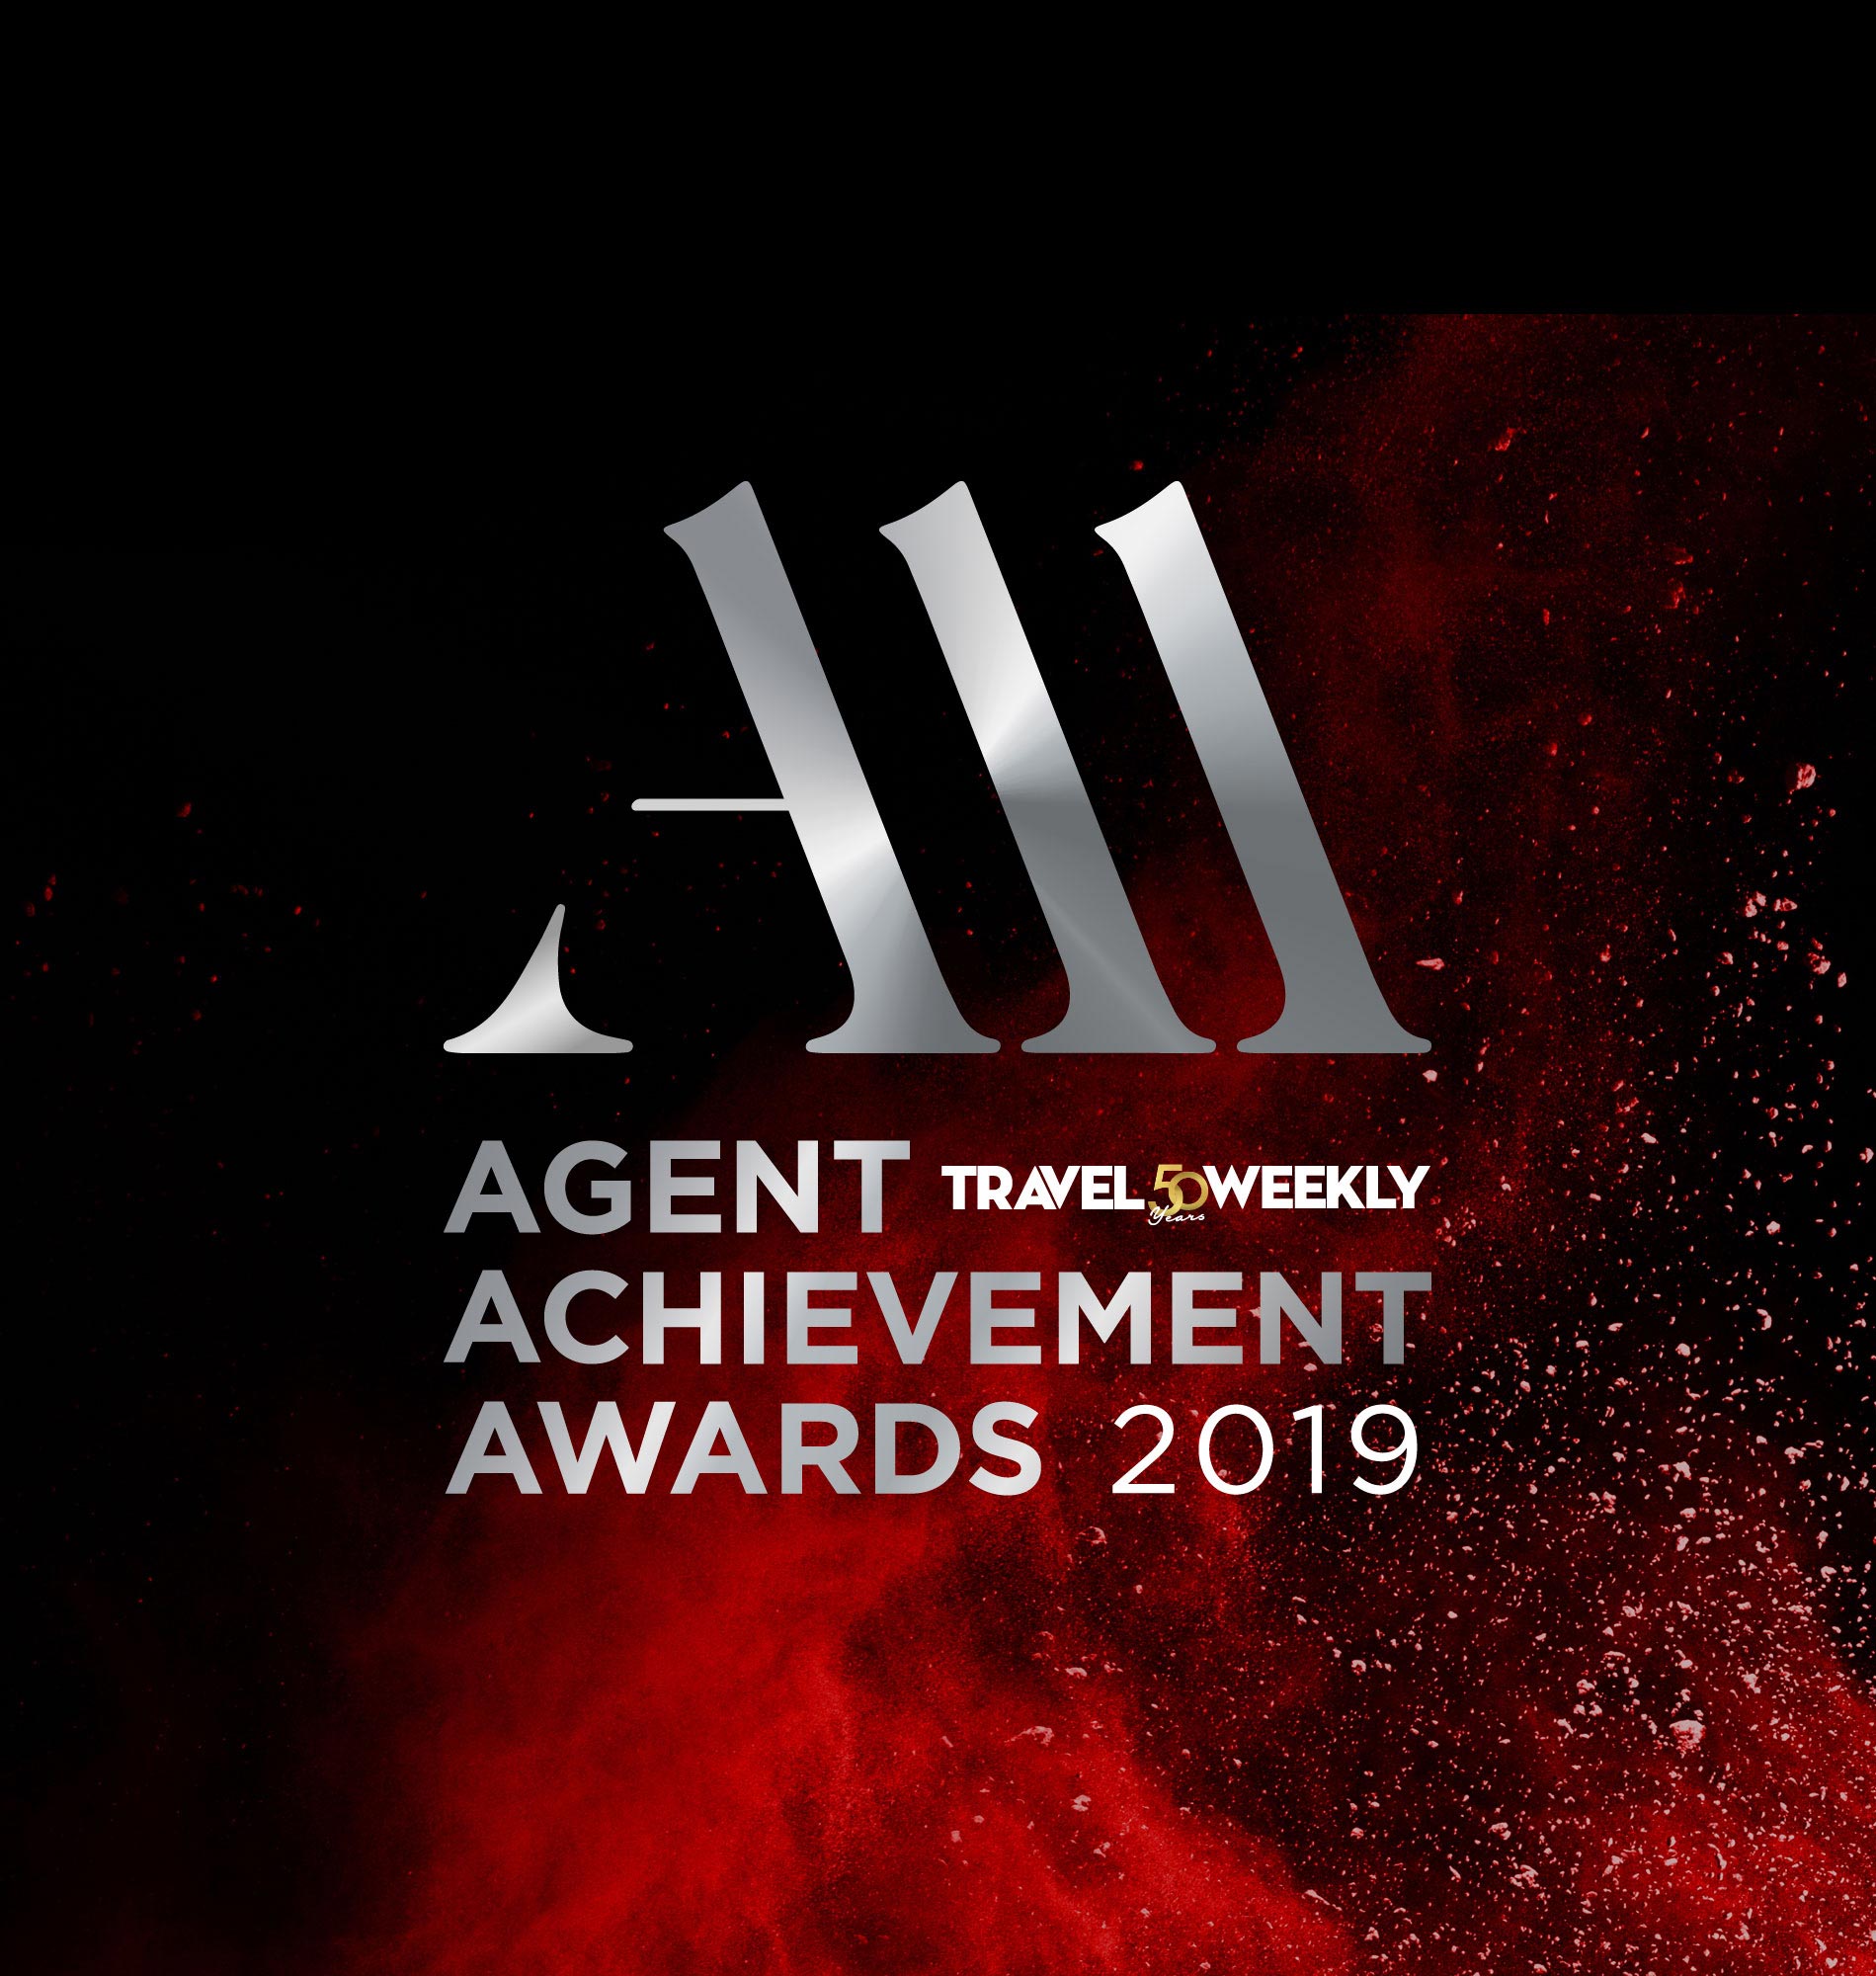 Agent Achievement Awards